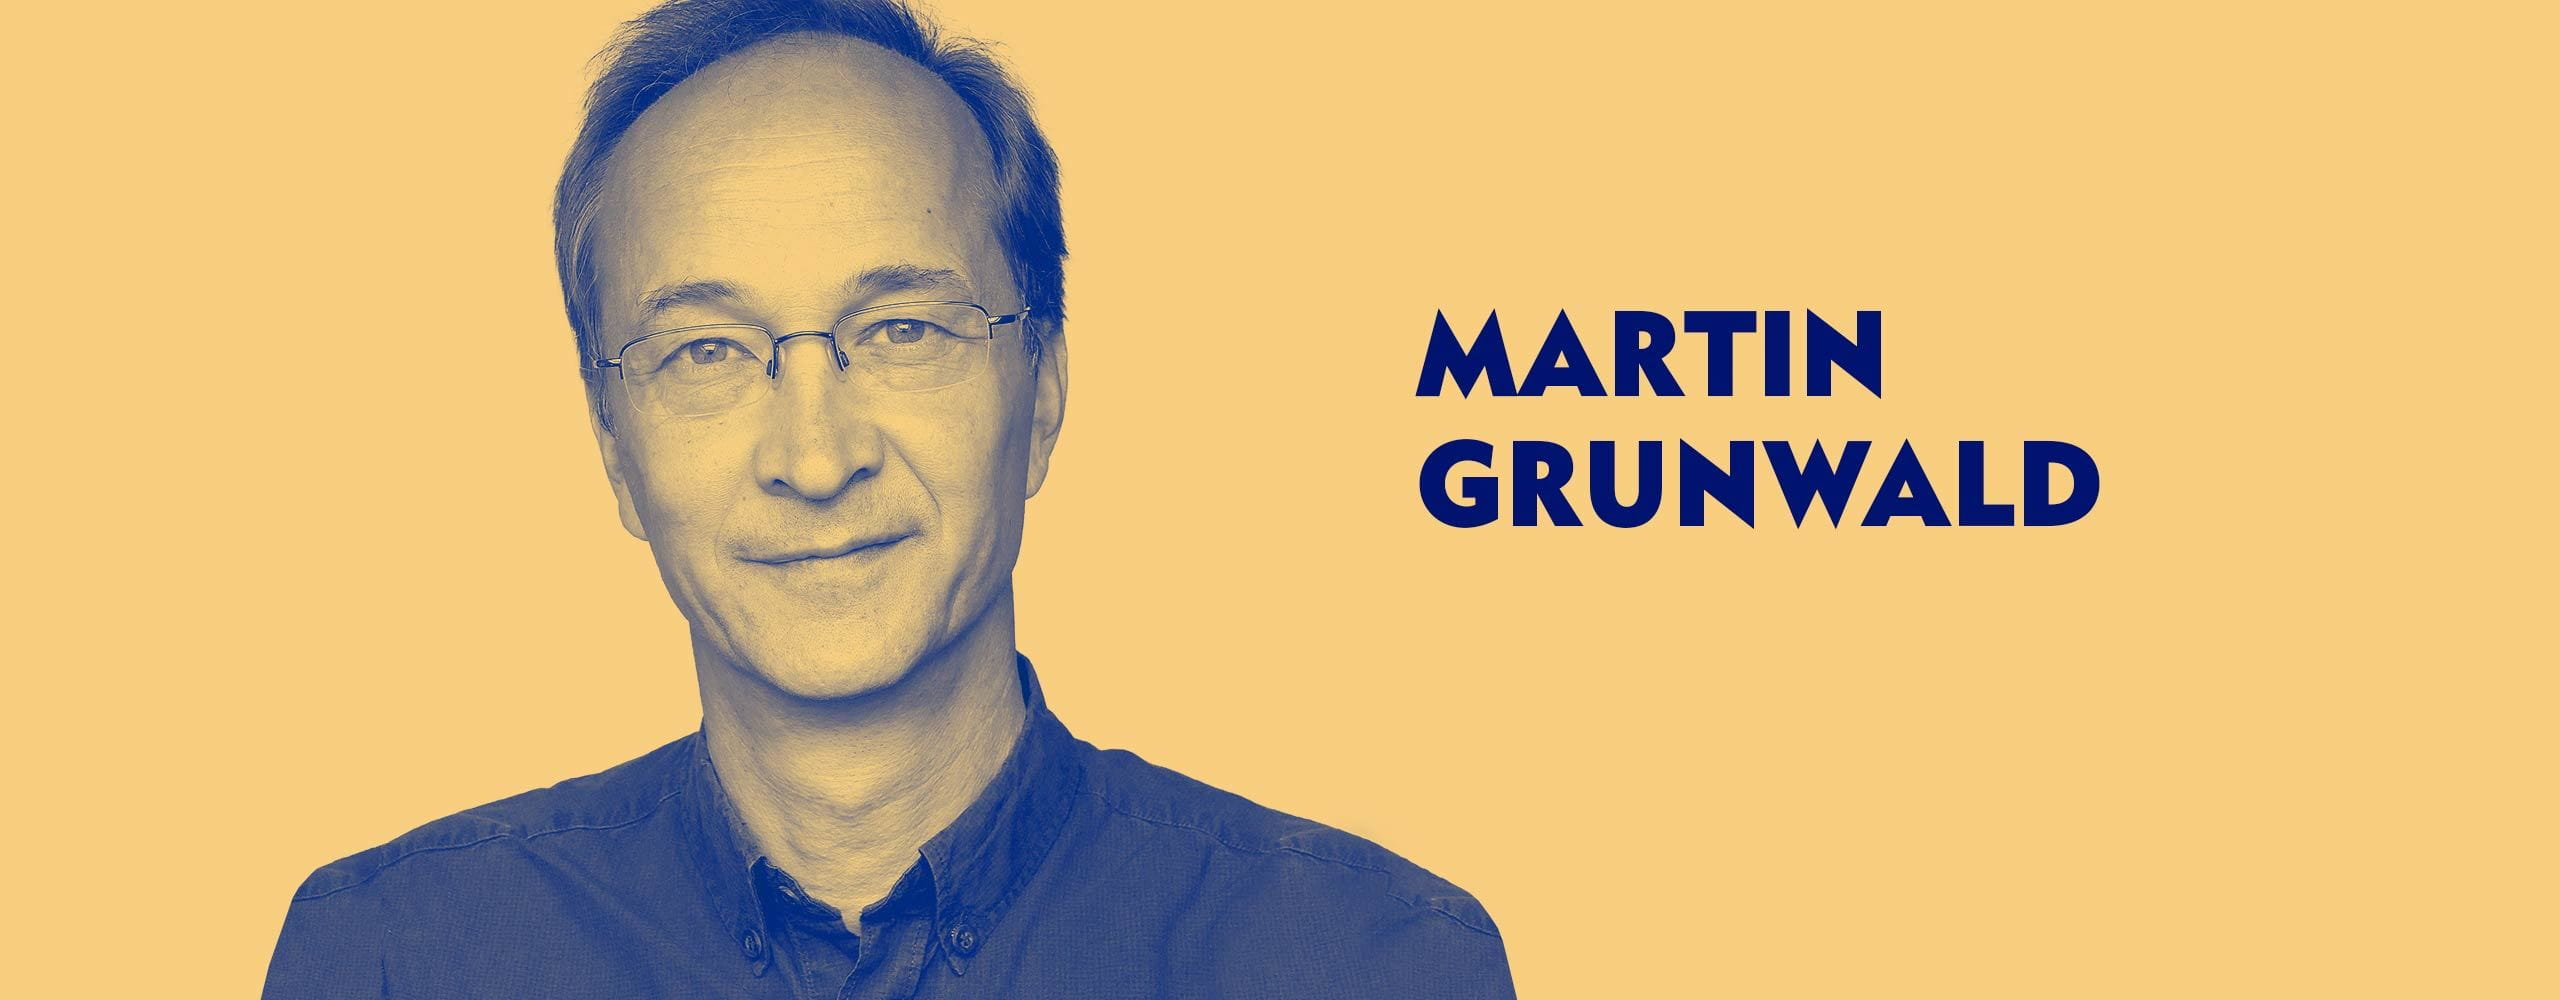 Martin Grunwaldin haastattelu